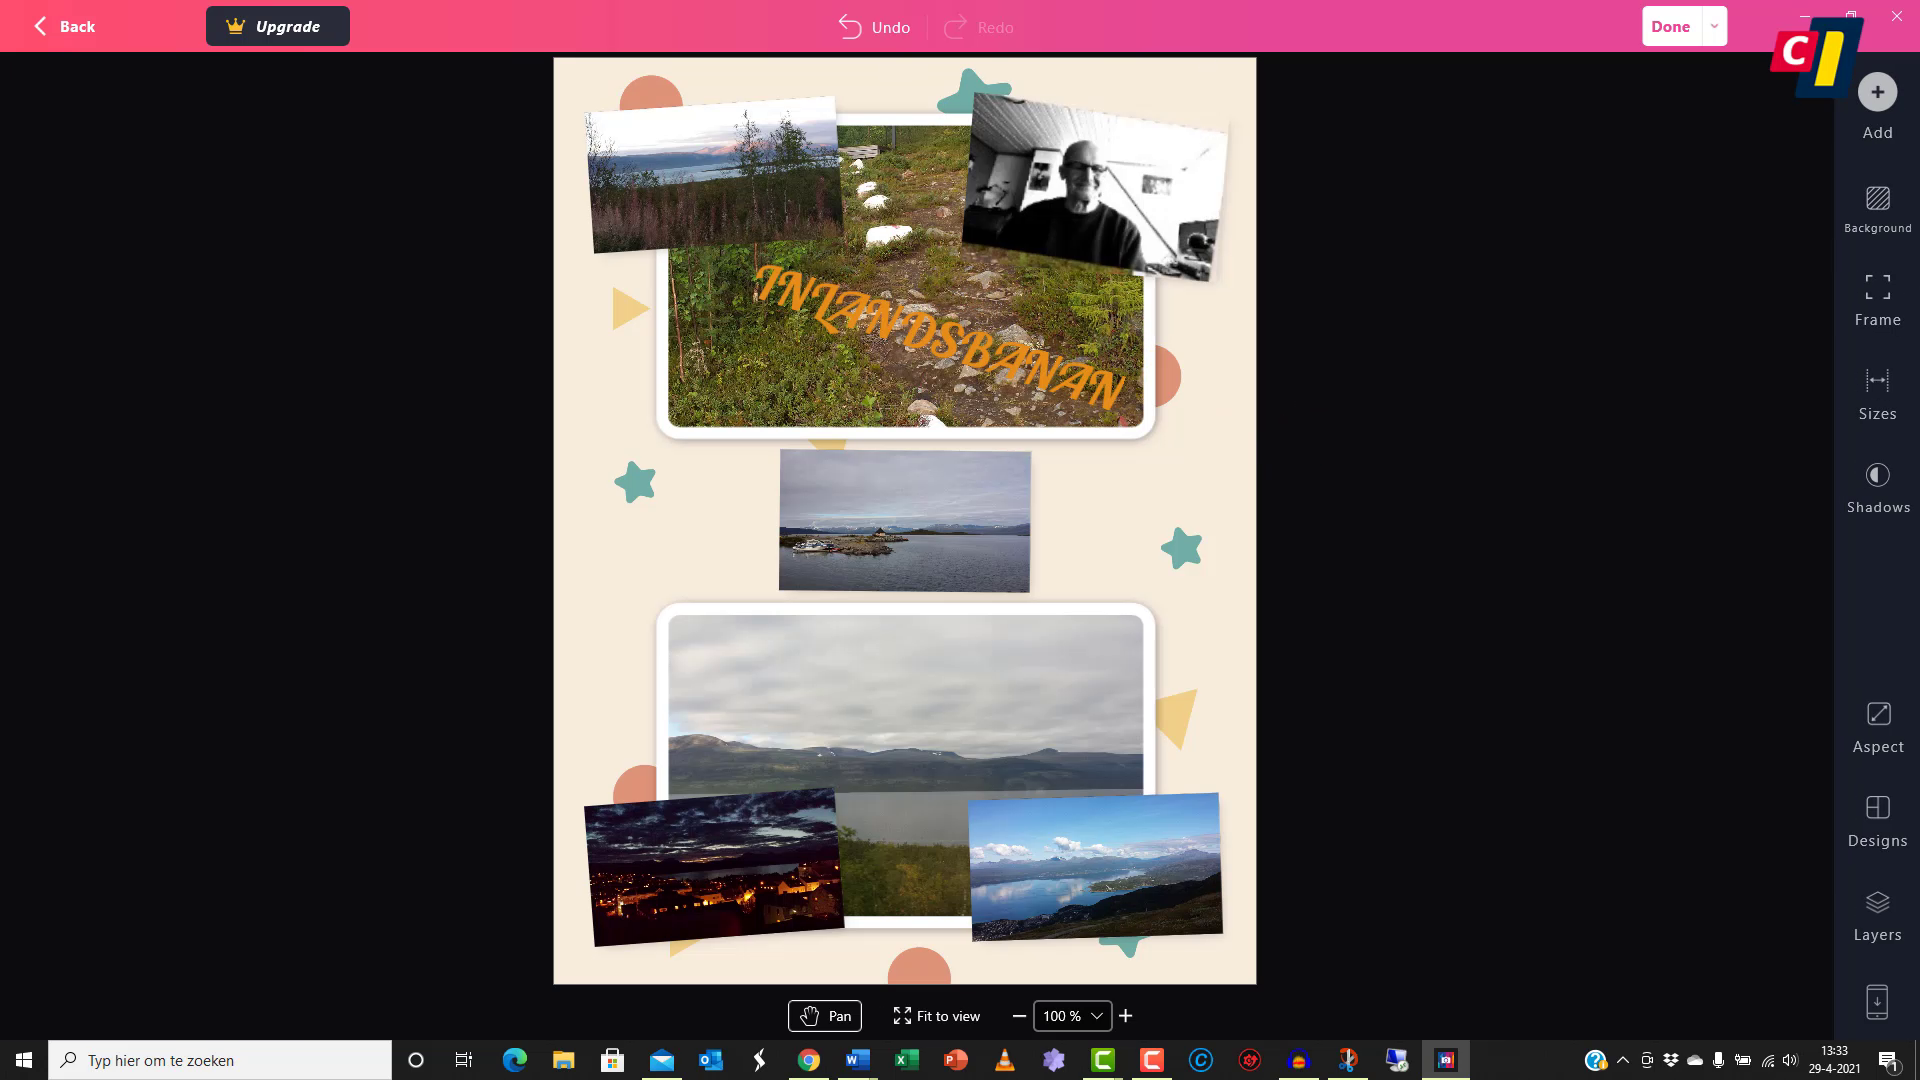 Windows Store: Phototastic Collage